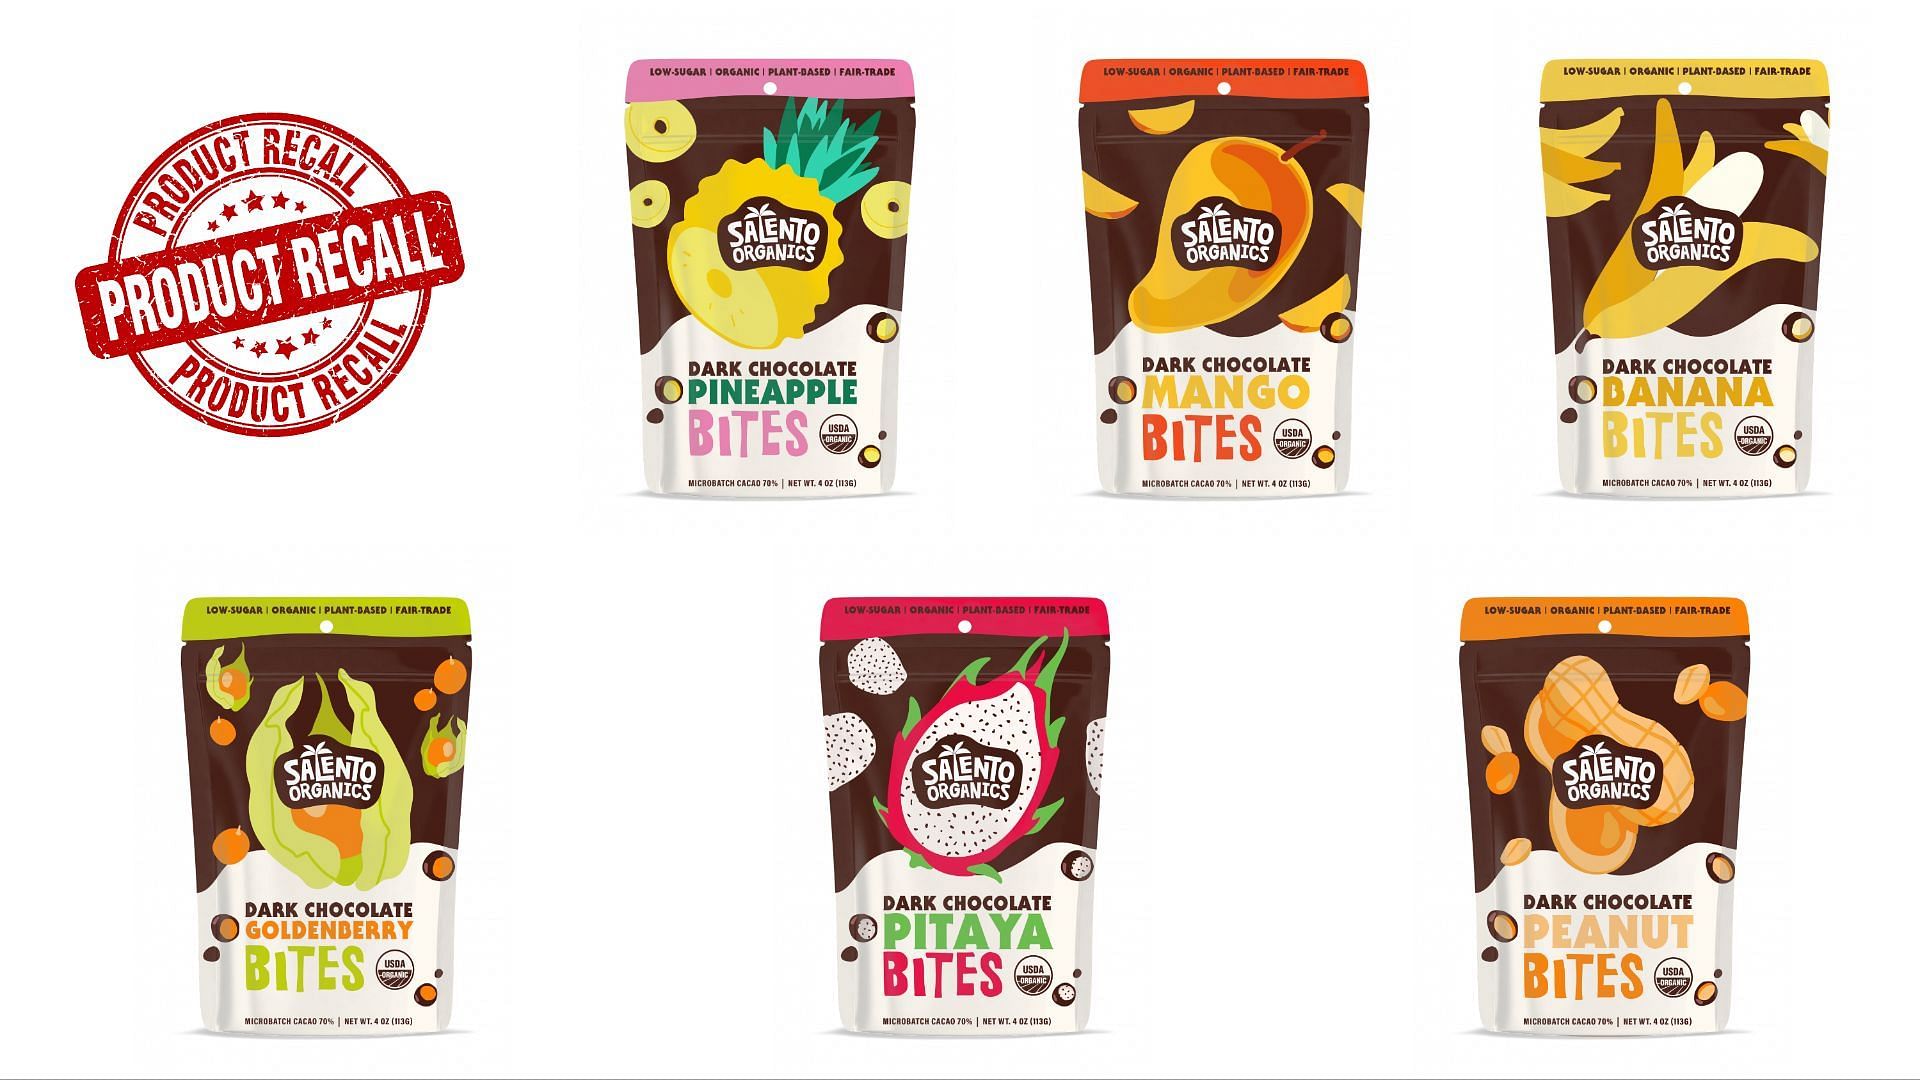 Salento Organics has recalled Dark Chocolate Fruit and Peanut Bites over undeclared milk concerns (Image via Salento Organics/FDA)